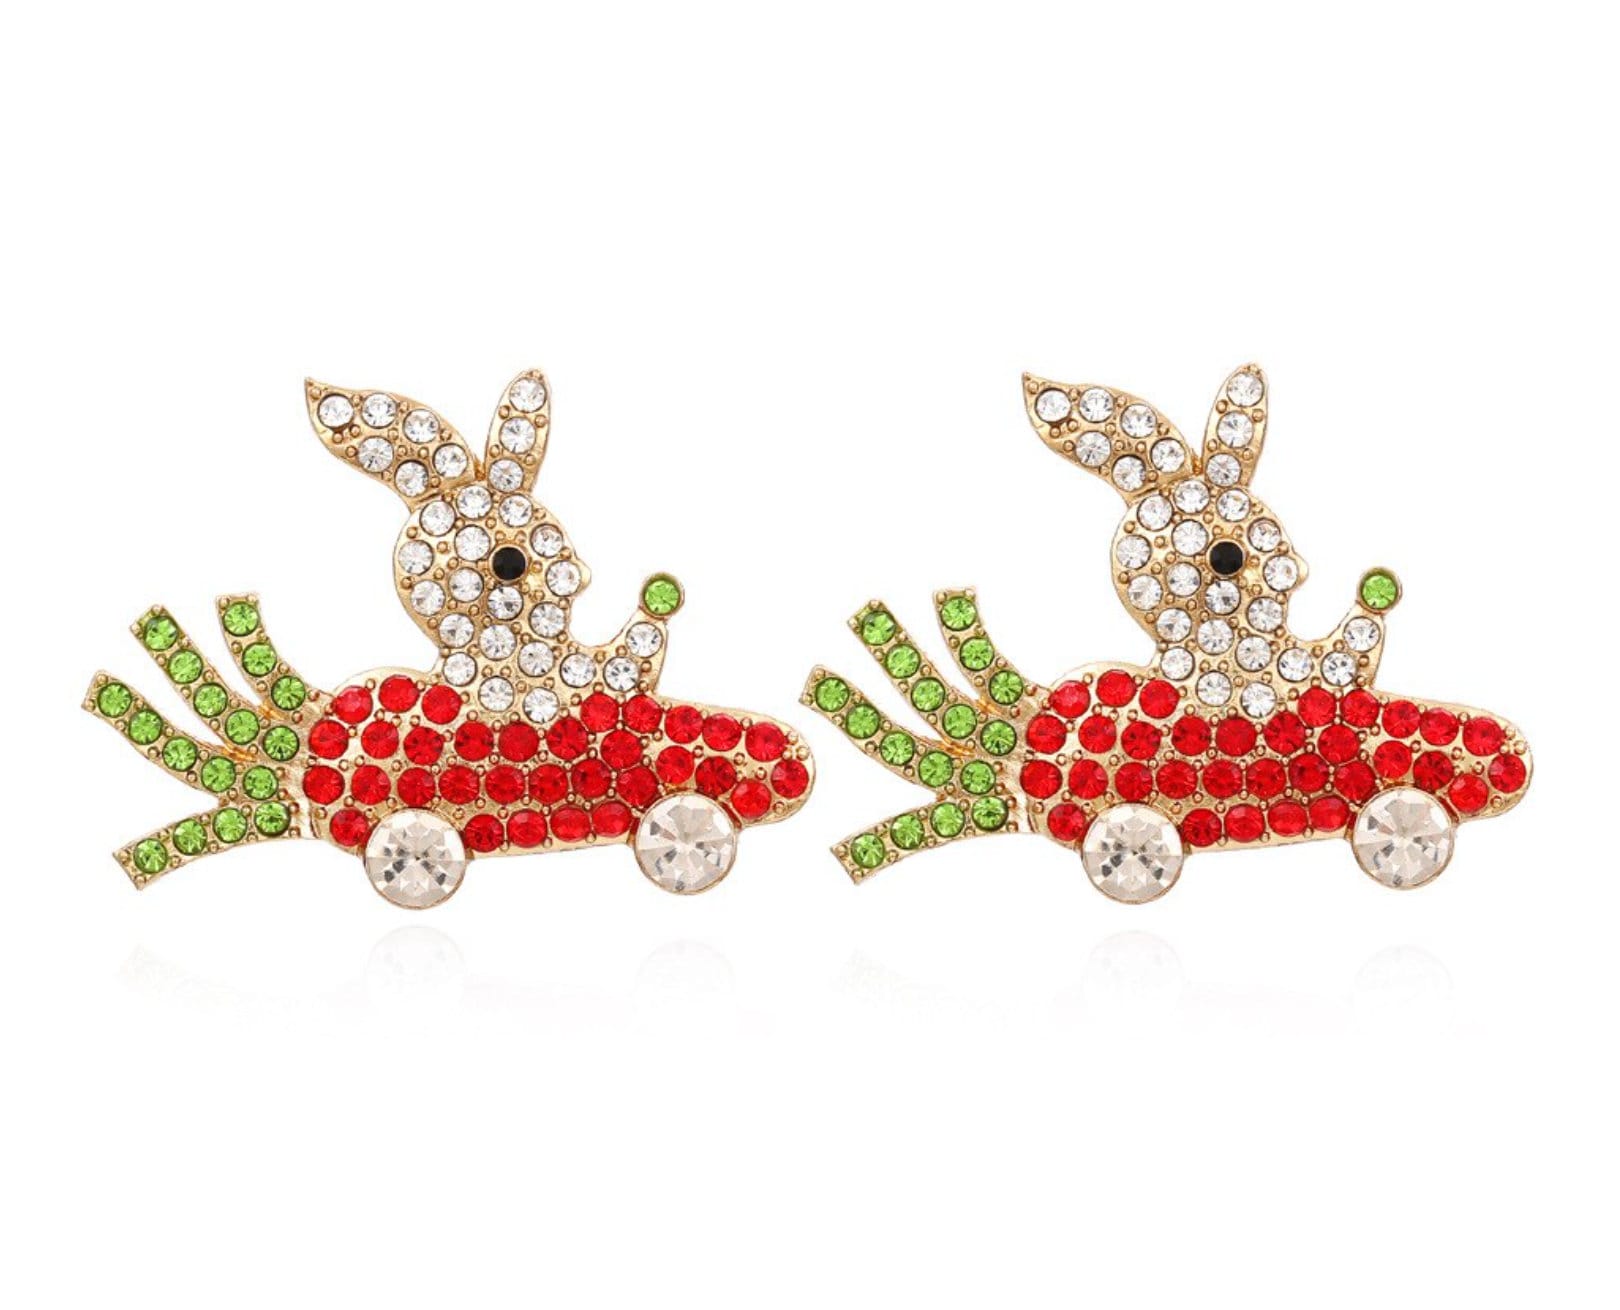 Rhinestone Rabbit Earrings - Easter Bunny, Carrot Earrings, Rabbit Accessories